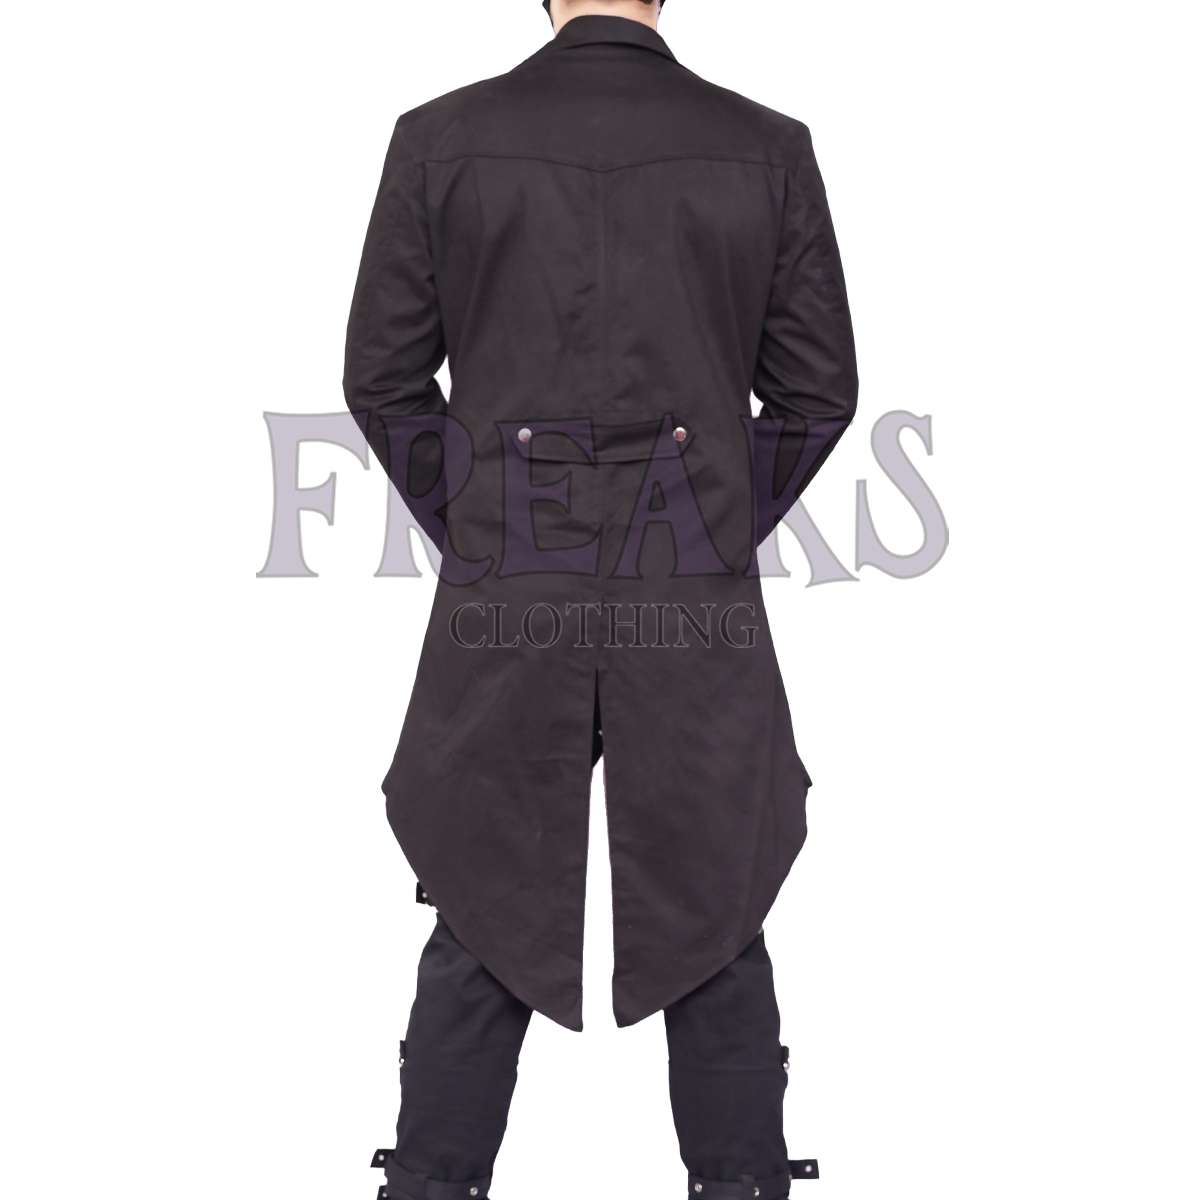 Victorian Black Steampunk Tailcoat